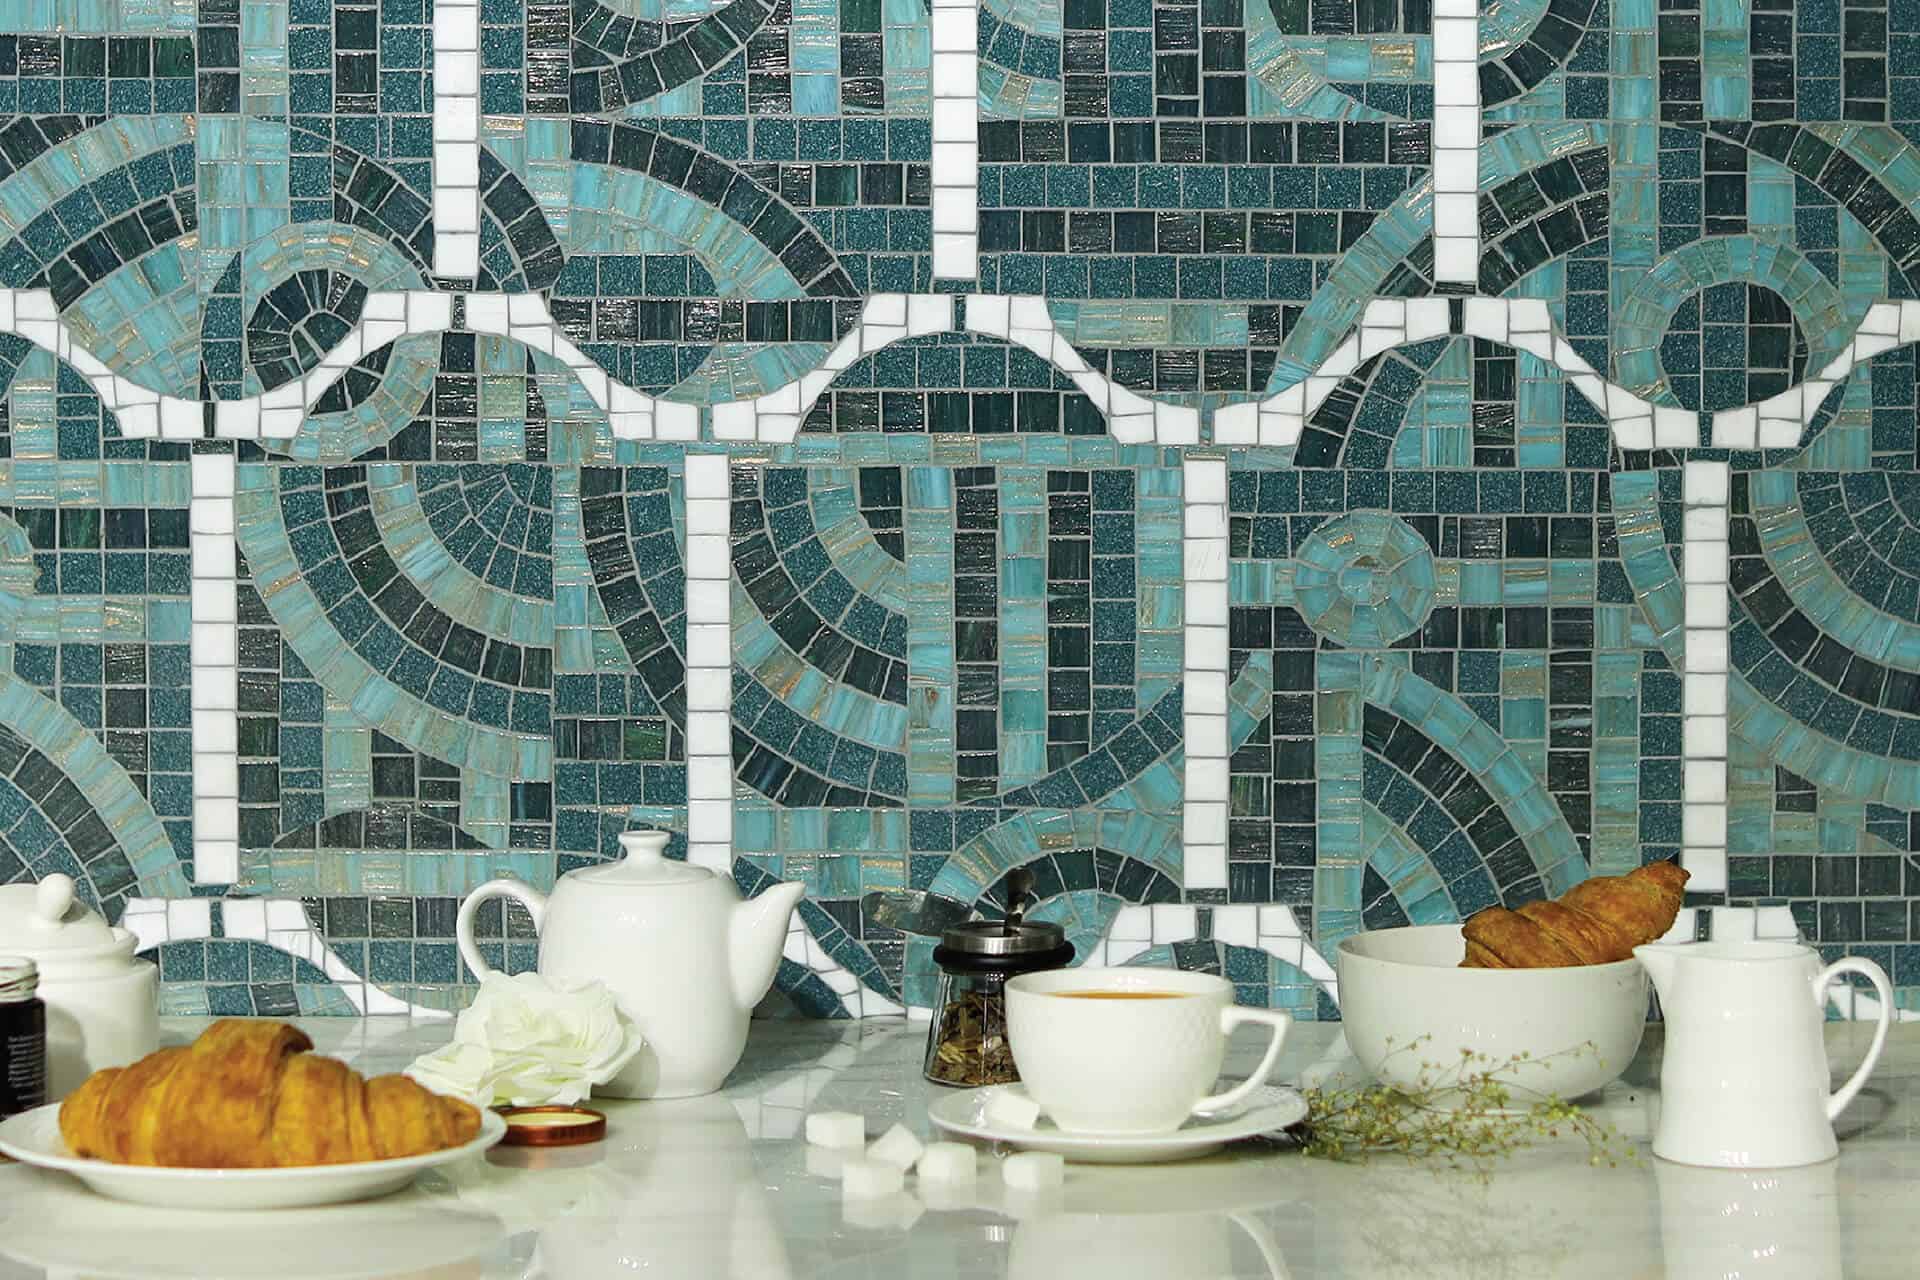 blog banner mosaic tile good for kitchen backsplash Trullo glass mosaic pattern